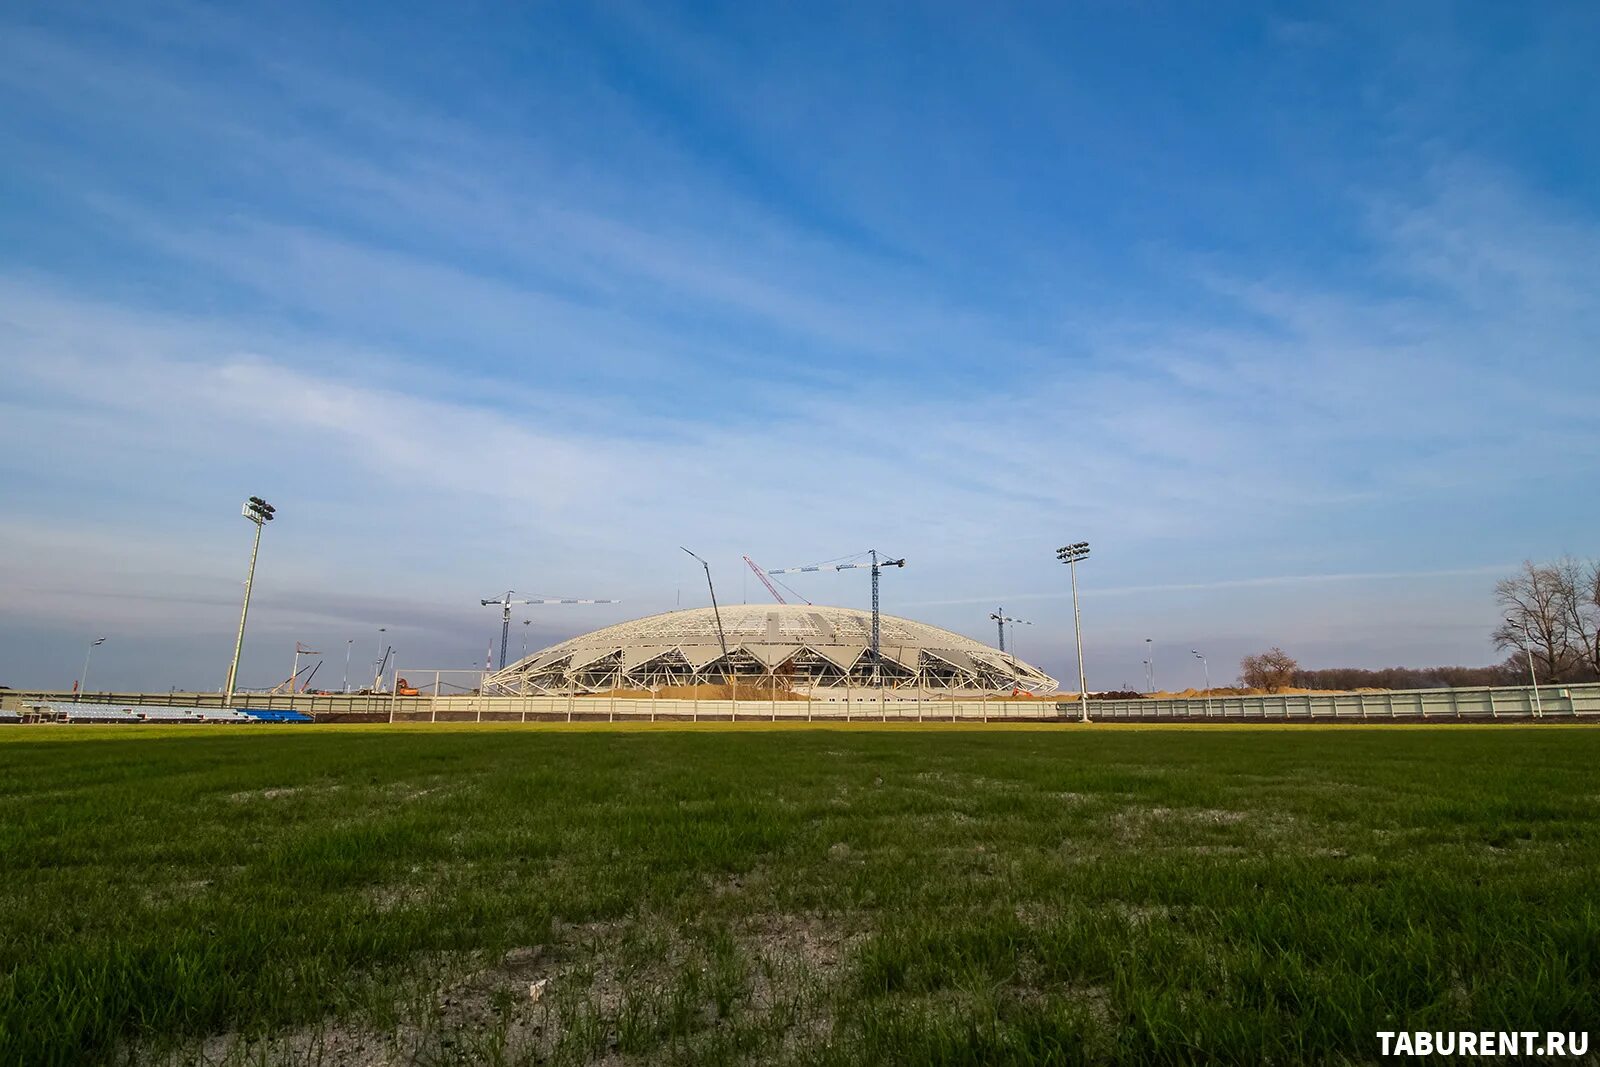 Стадион Самара Арена. Стадион Волгоград. Макет стадиона Самара Арена. Стадион Самара Арена проект.